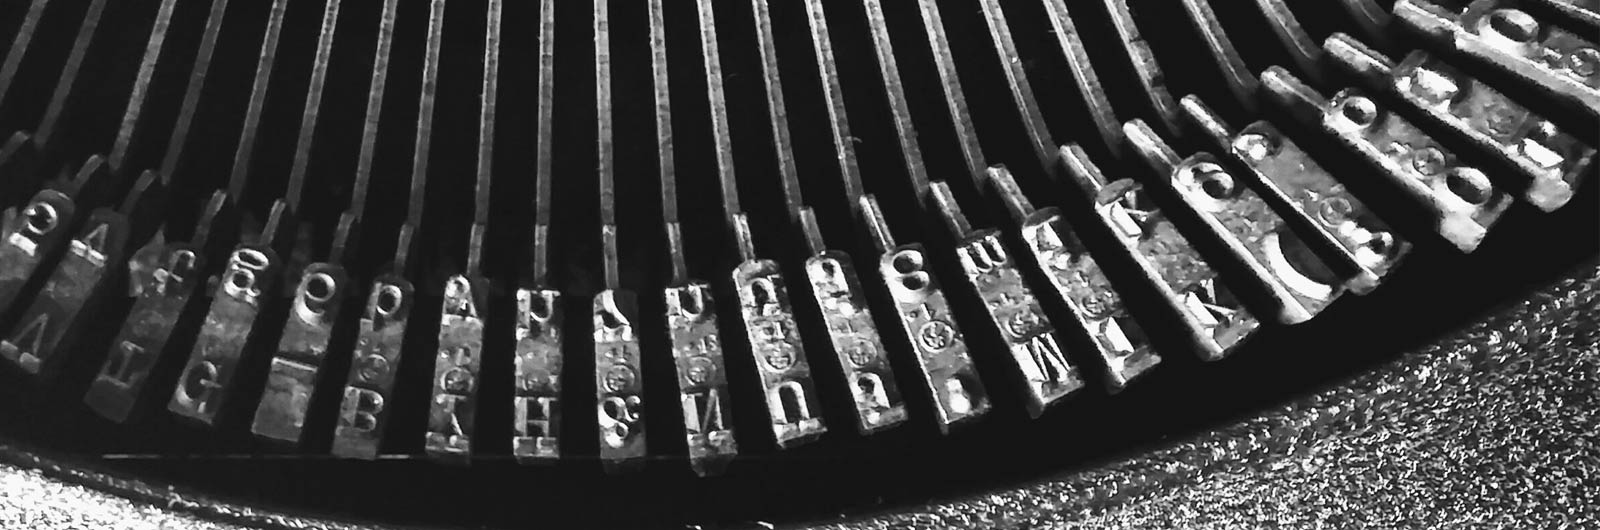 close up of vintage typwriter